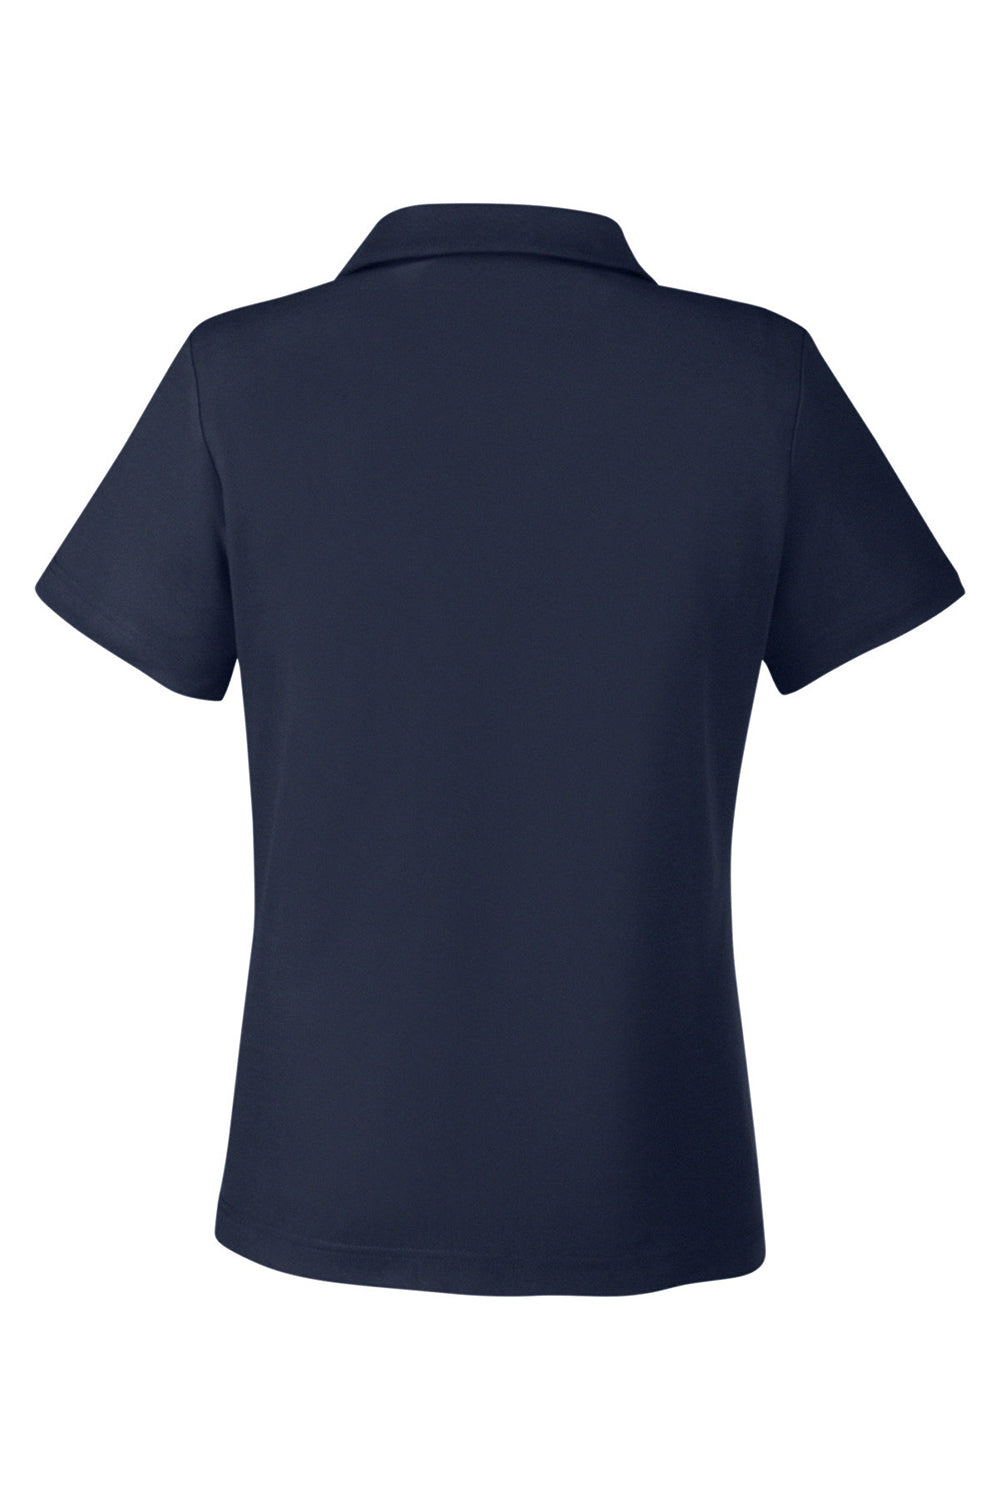 Core 365 CE112W Womens Fusion ChromaSoft Performance Moisture Wicking Pique Short Sleeve Polo Shirt Classic Navy Blue Flat Back